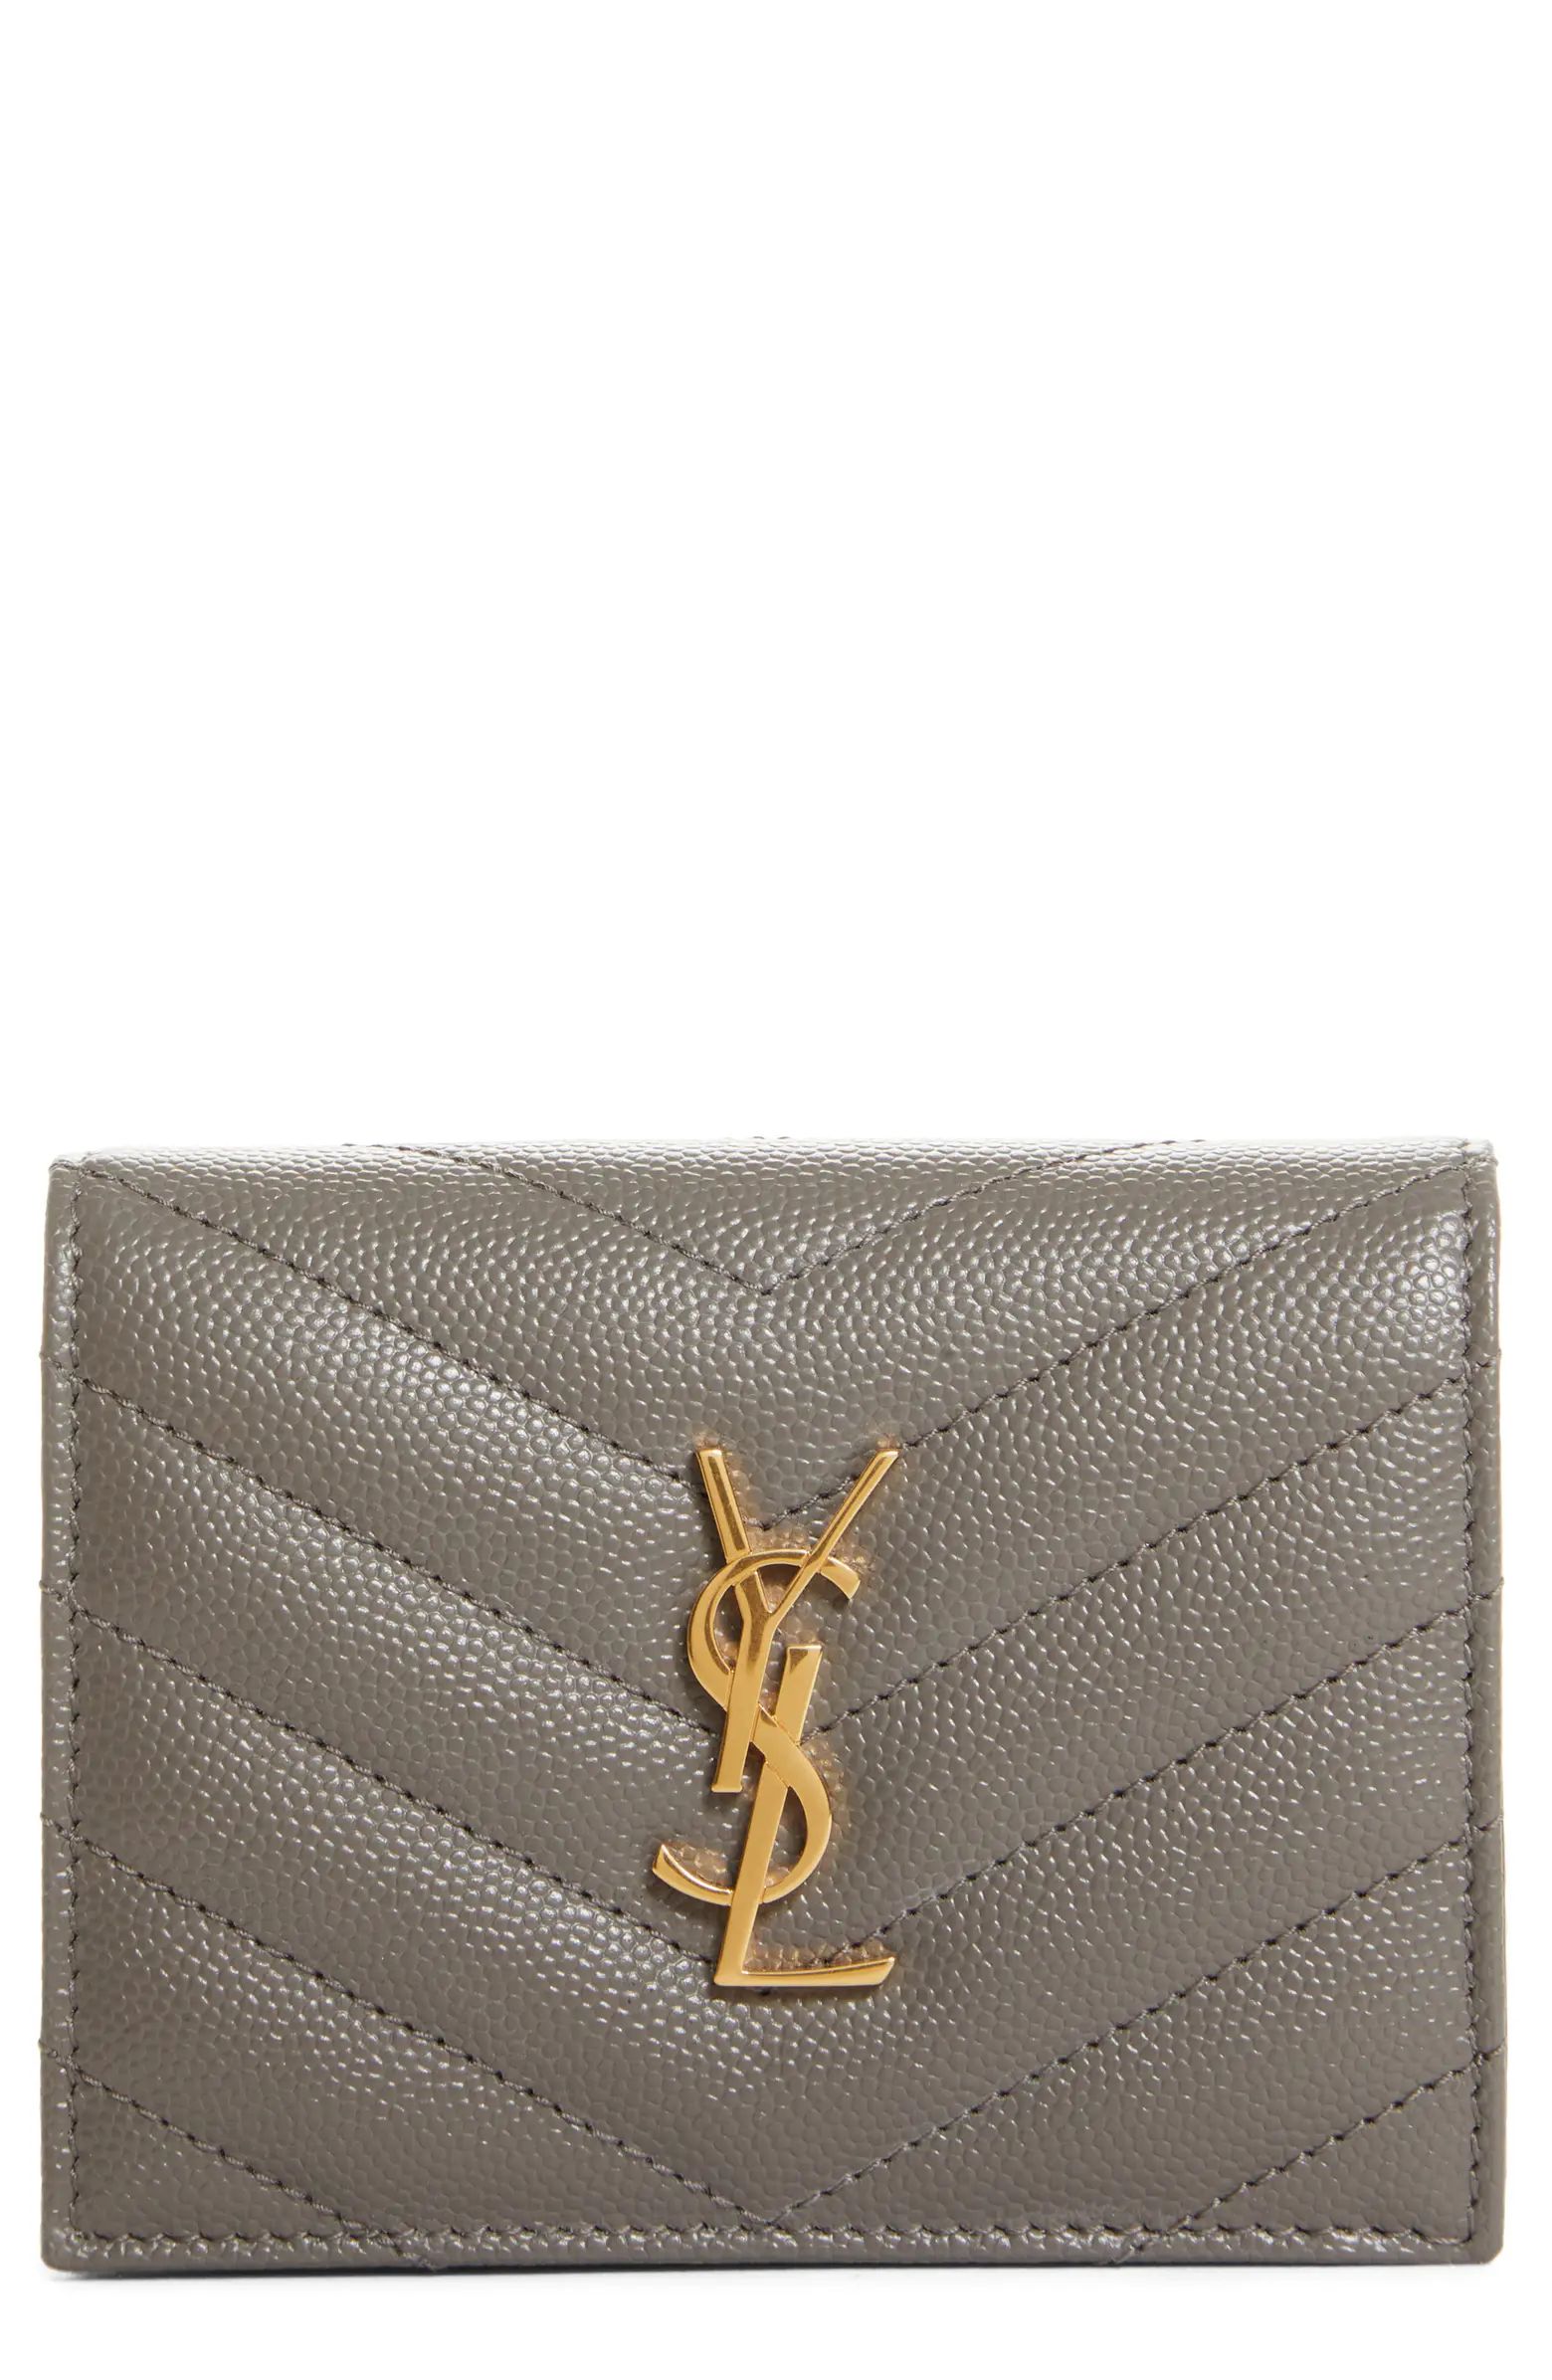 Saint Laurent Monogram Matelassé Leather Wallet | Nordstrom | Nordstrom